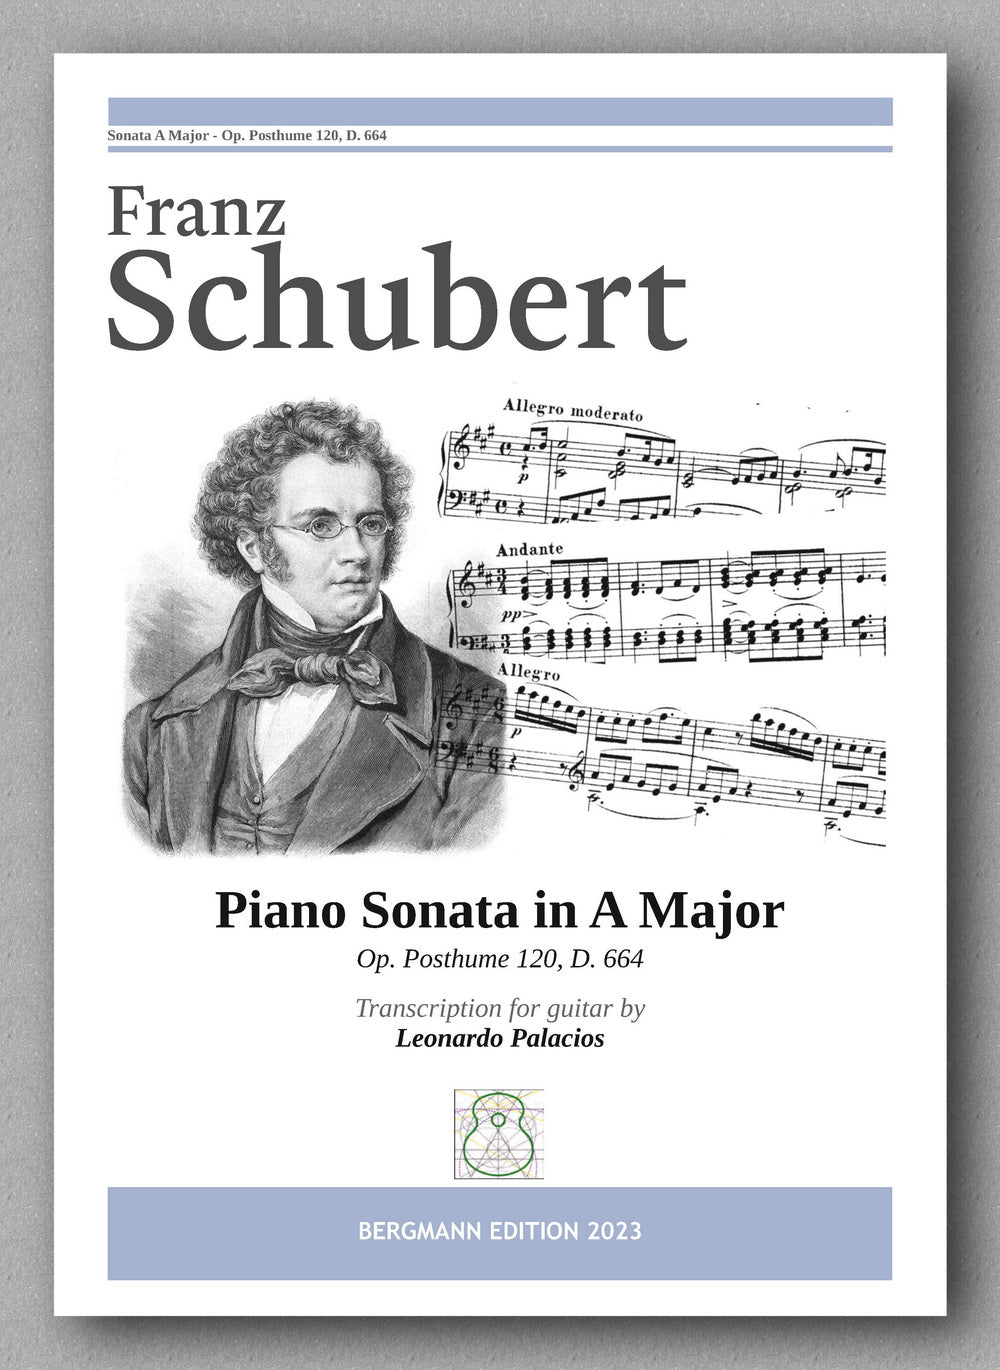 Frantz Schubert, Piano Sonata in A Major- preview of the cover